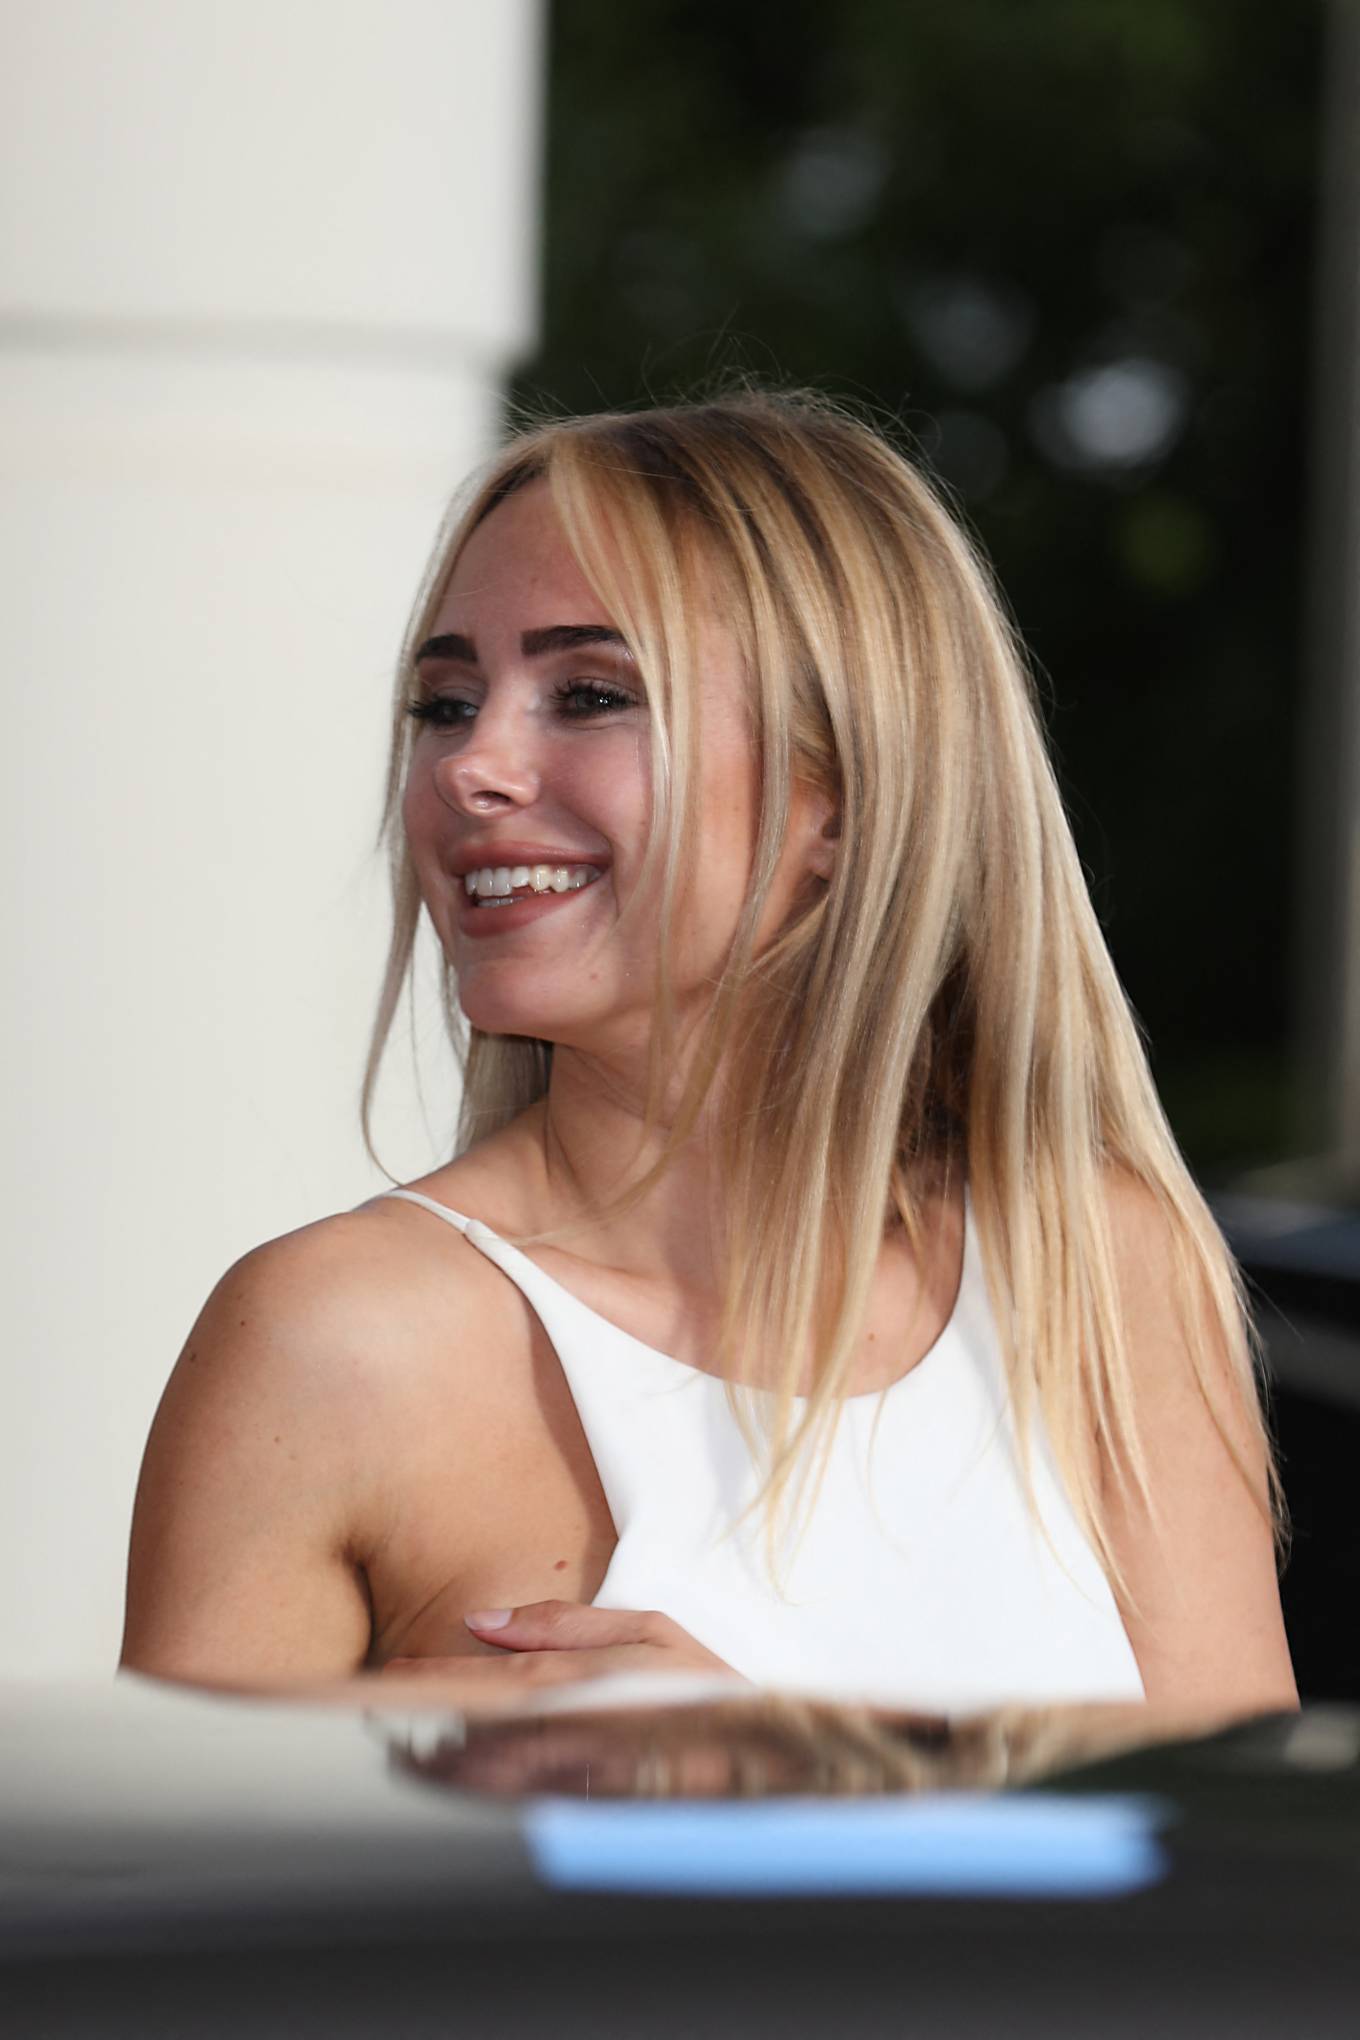 Kimberley Garner 2021 : Kimberley Garner – Seen in a white dress during Cannes Film Festival 2021-13